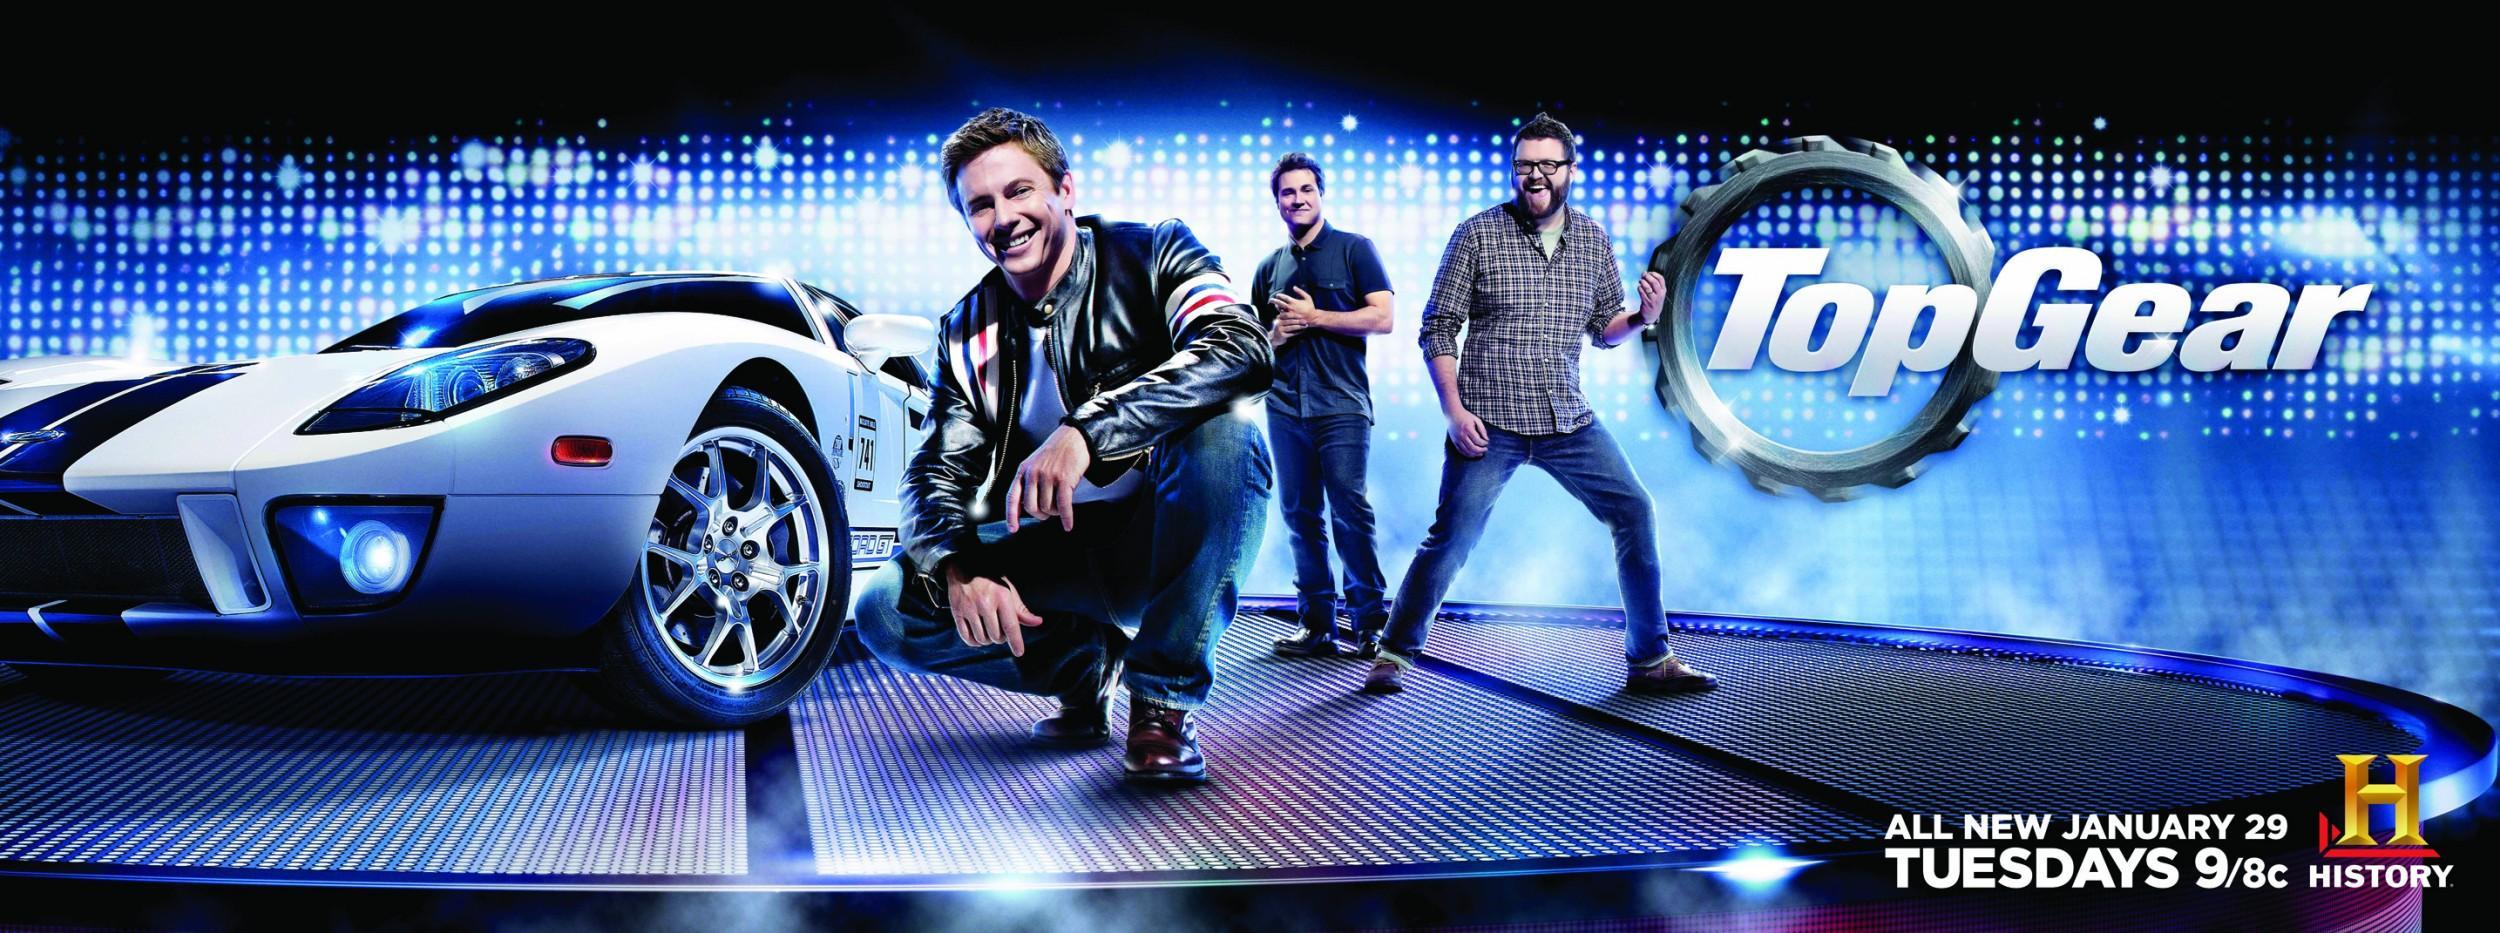 Постер фильма Топ Гир США | Top Gear USA